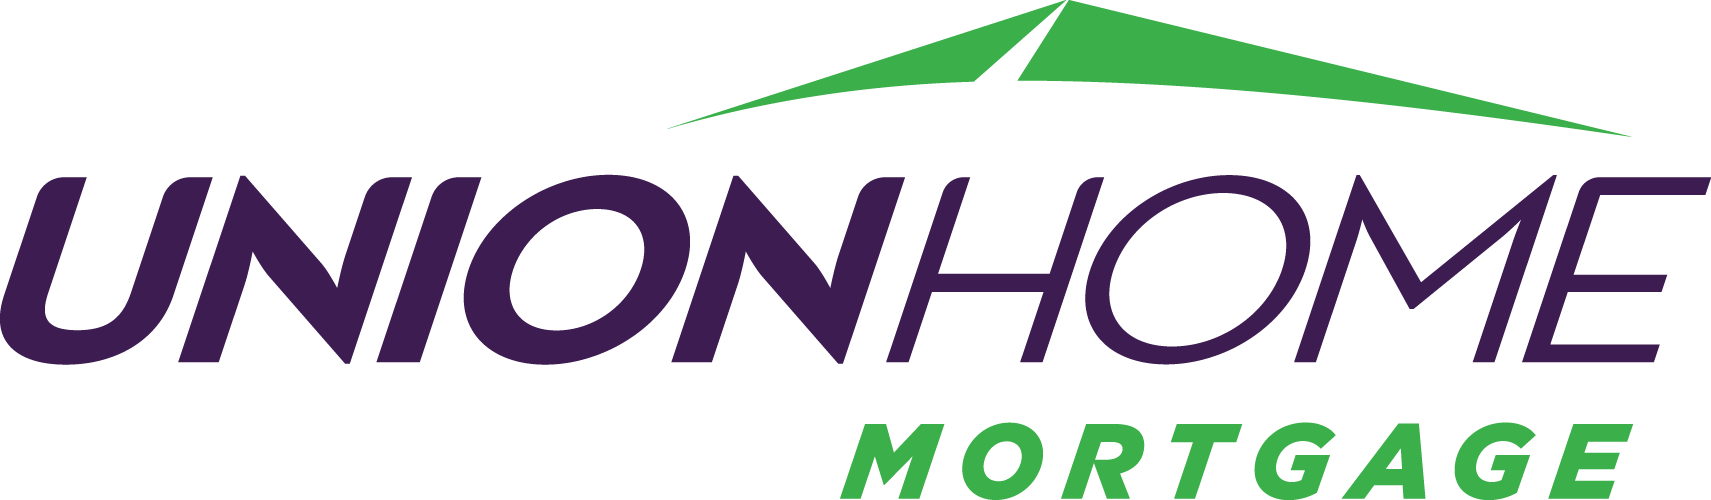 Union Home Mortgage Sweepstakes Logo